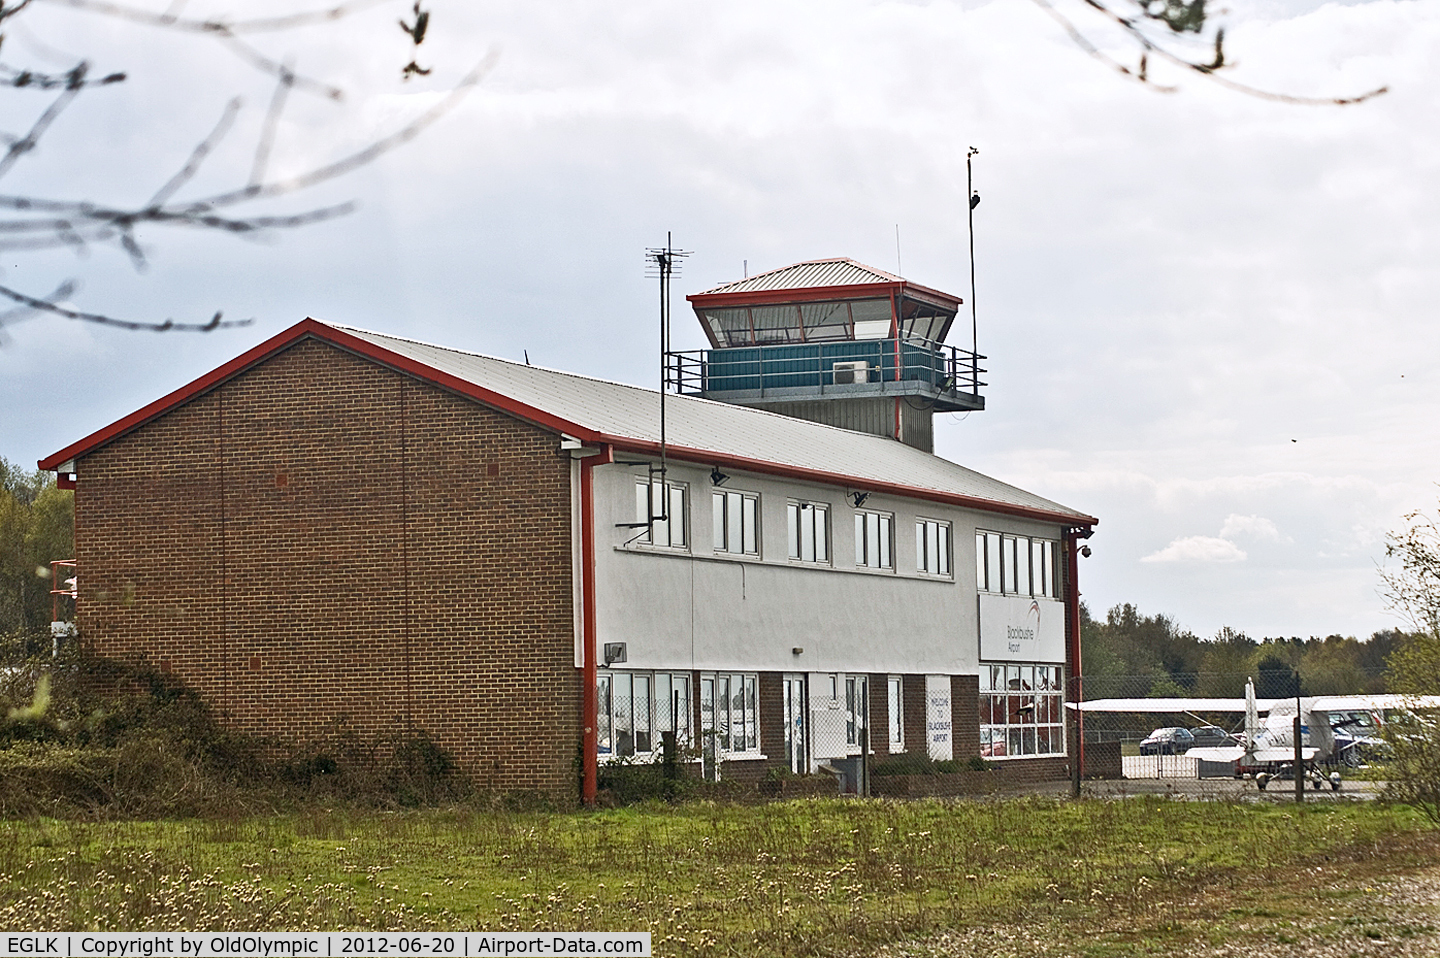 Blackbushe Airport, Camberley, England United Kingdom (EGLK) - Control tower block